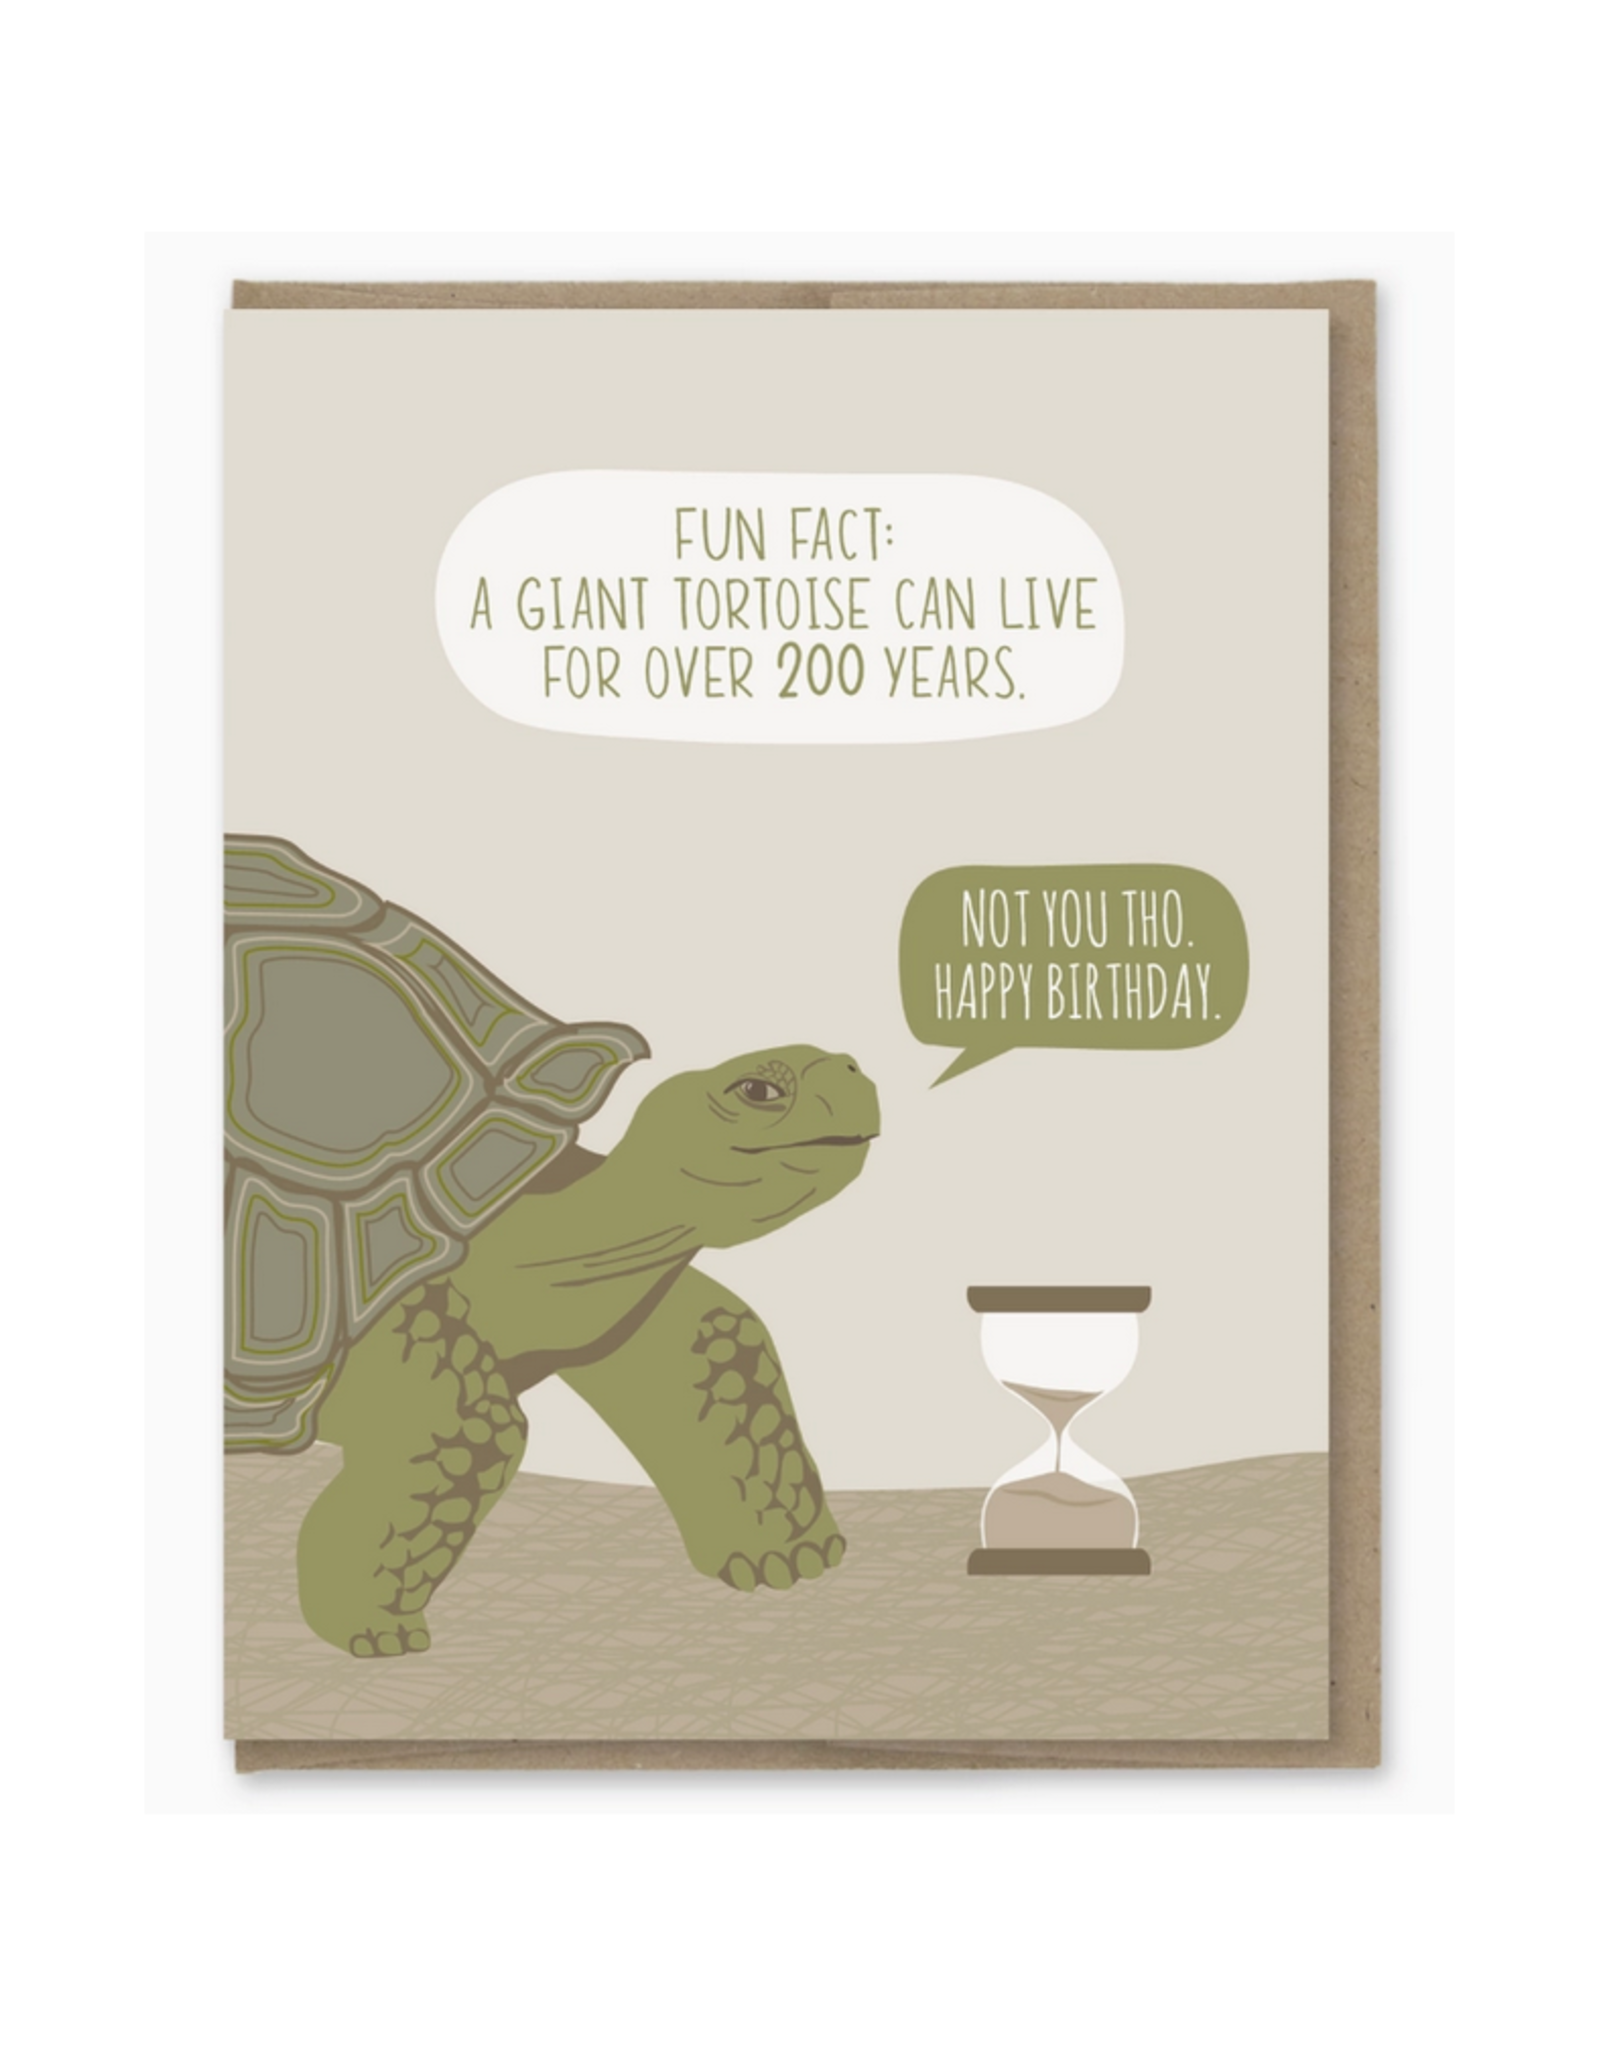 Tortoise Fact Birthday Card